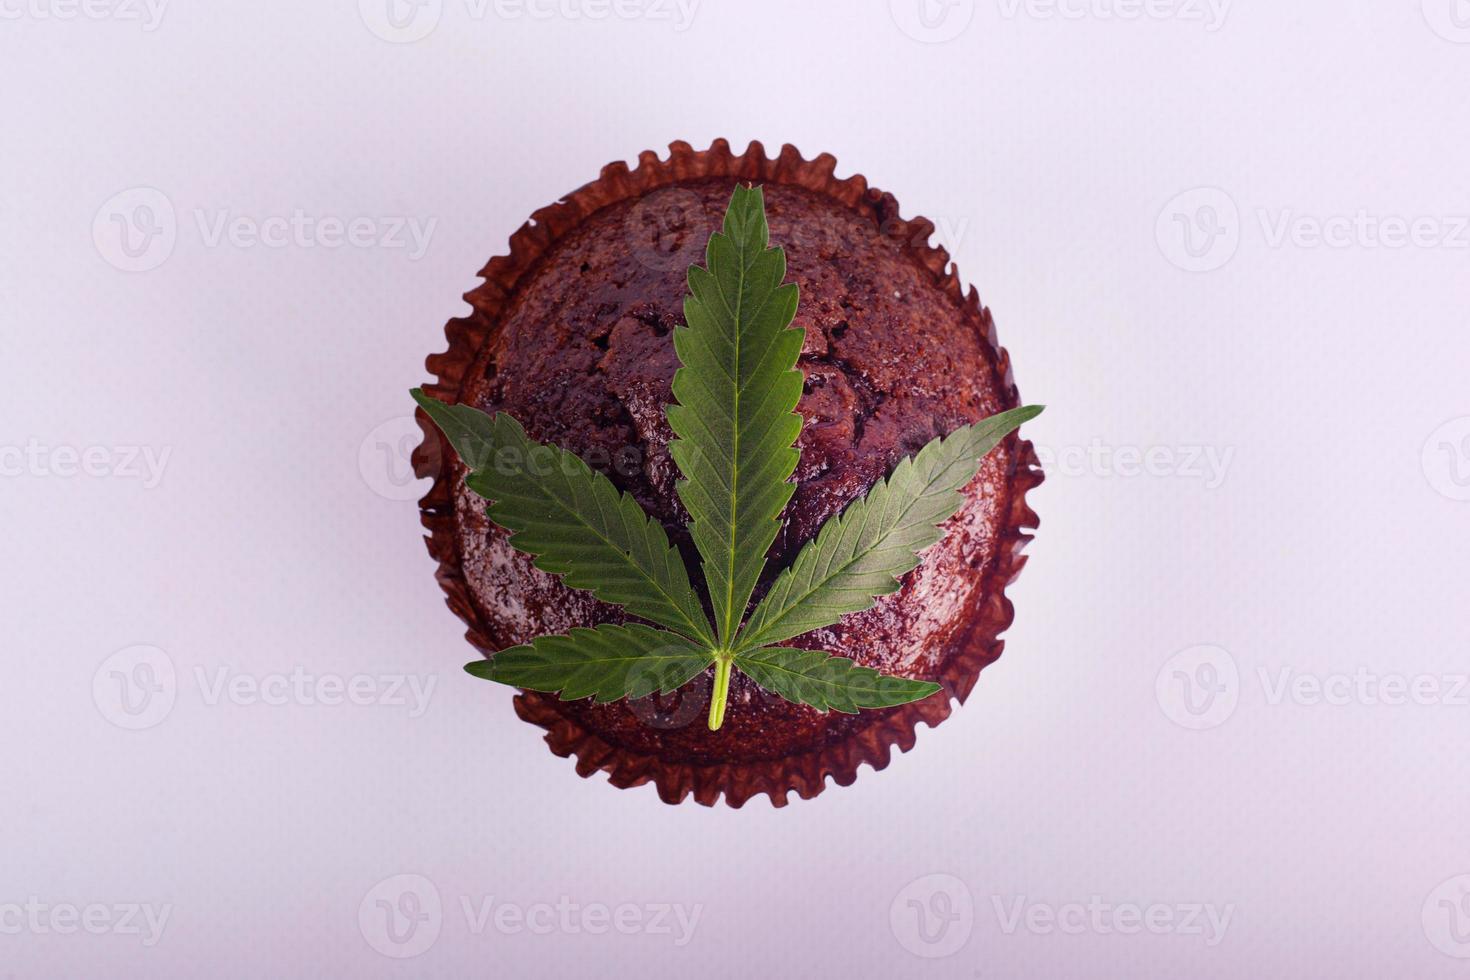 muffin de chocolate y hoja de marihuana verde foto